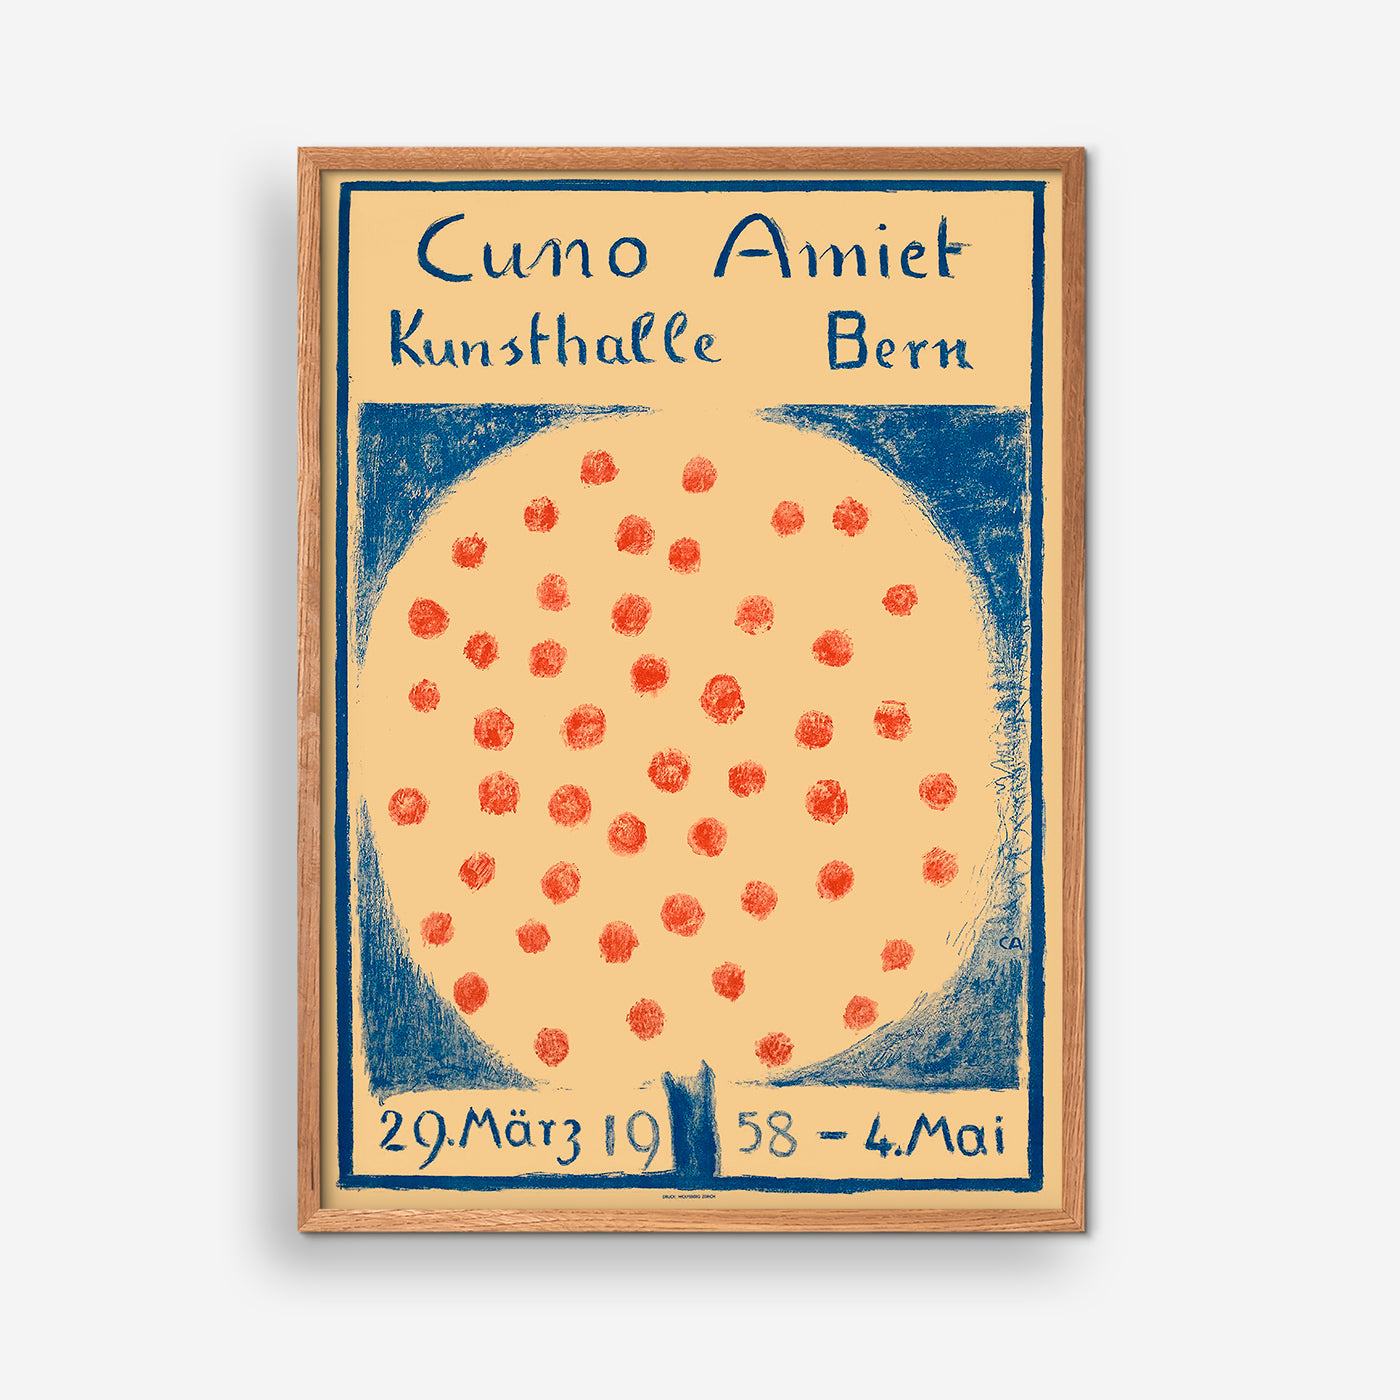 Cuno Amiet exhibition poster